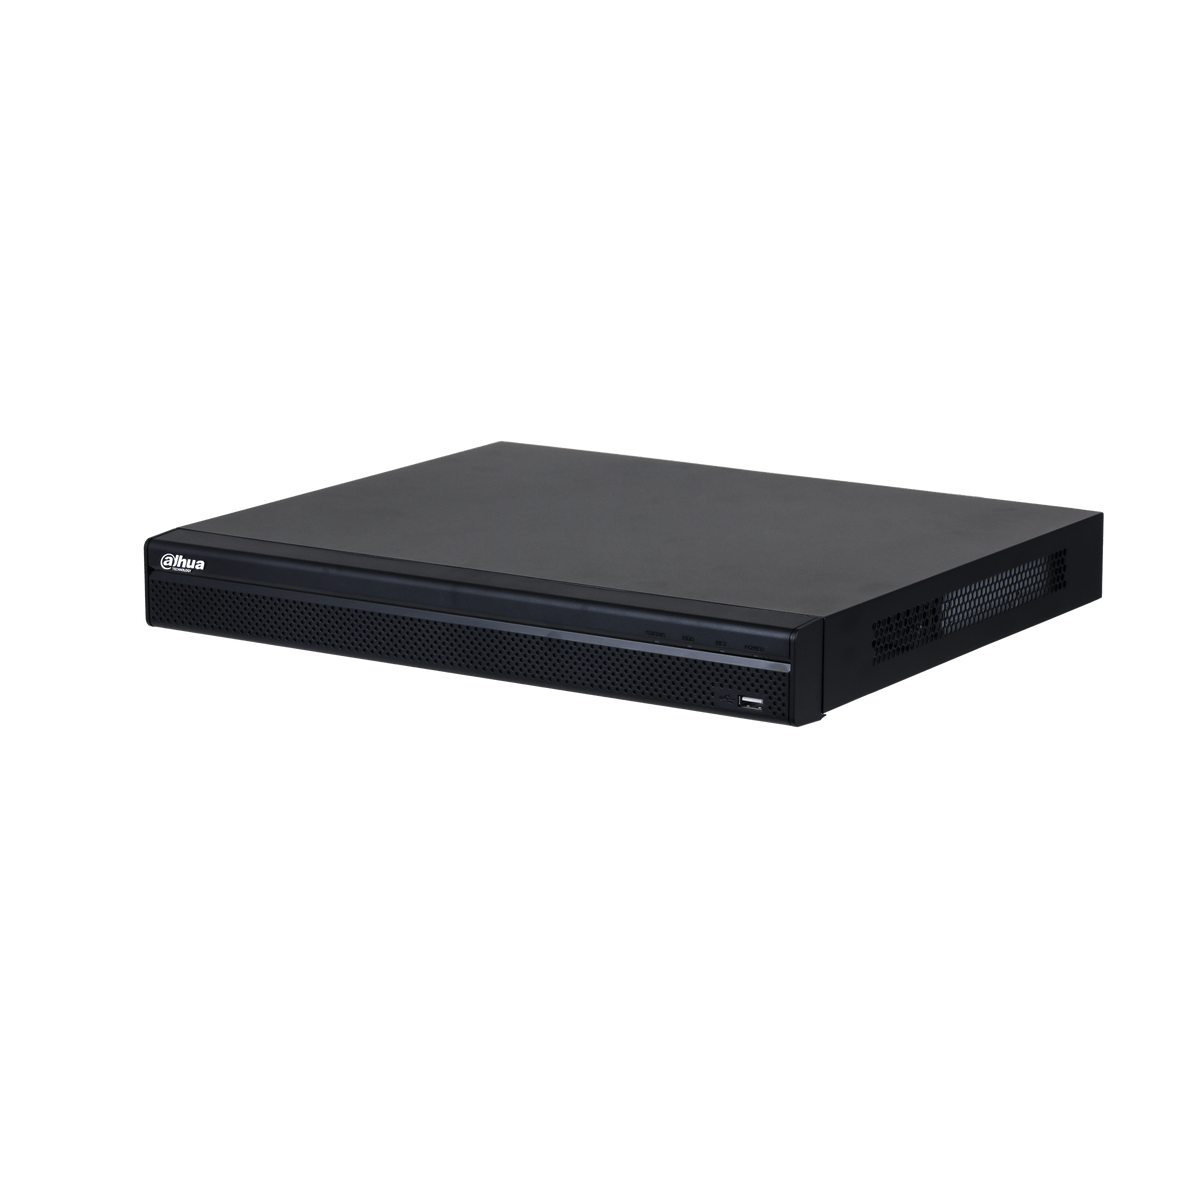 DAHUA NVR4208-8P-4KS2/L 8 Channel 1U 2HDDs 8PoE Network Video Recorder